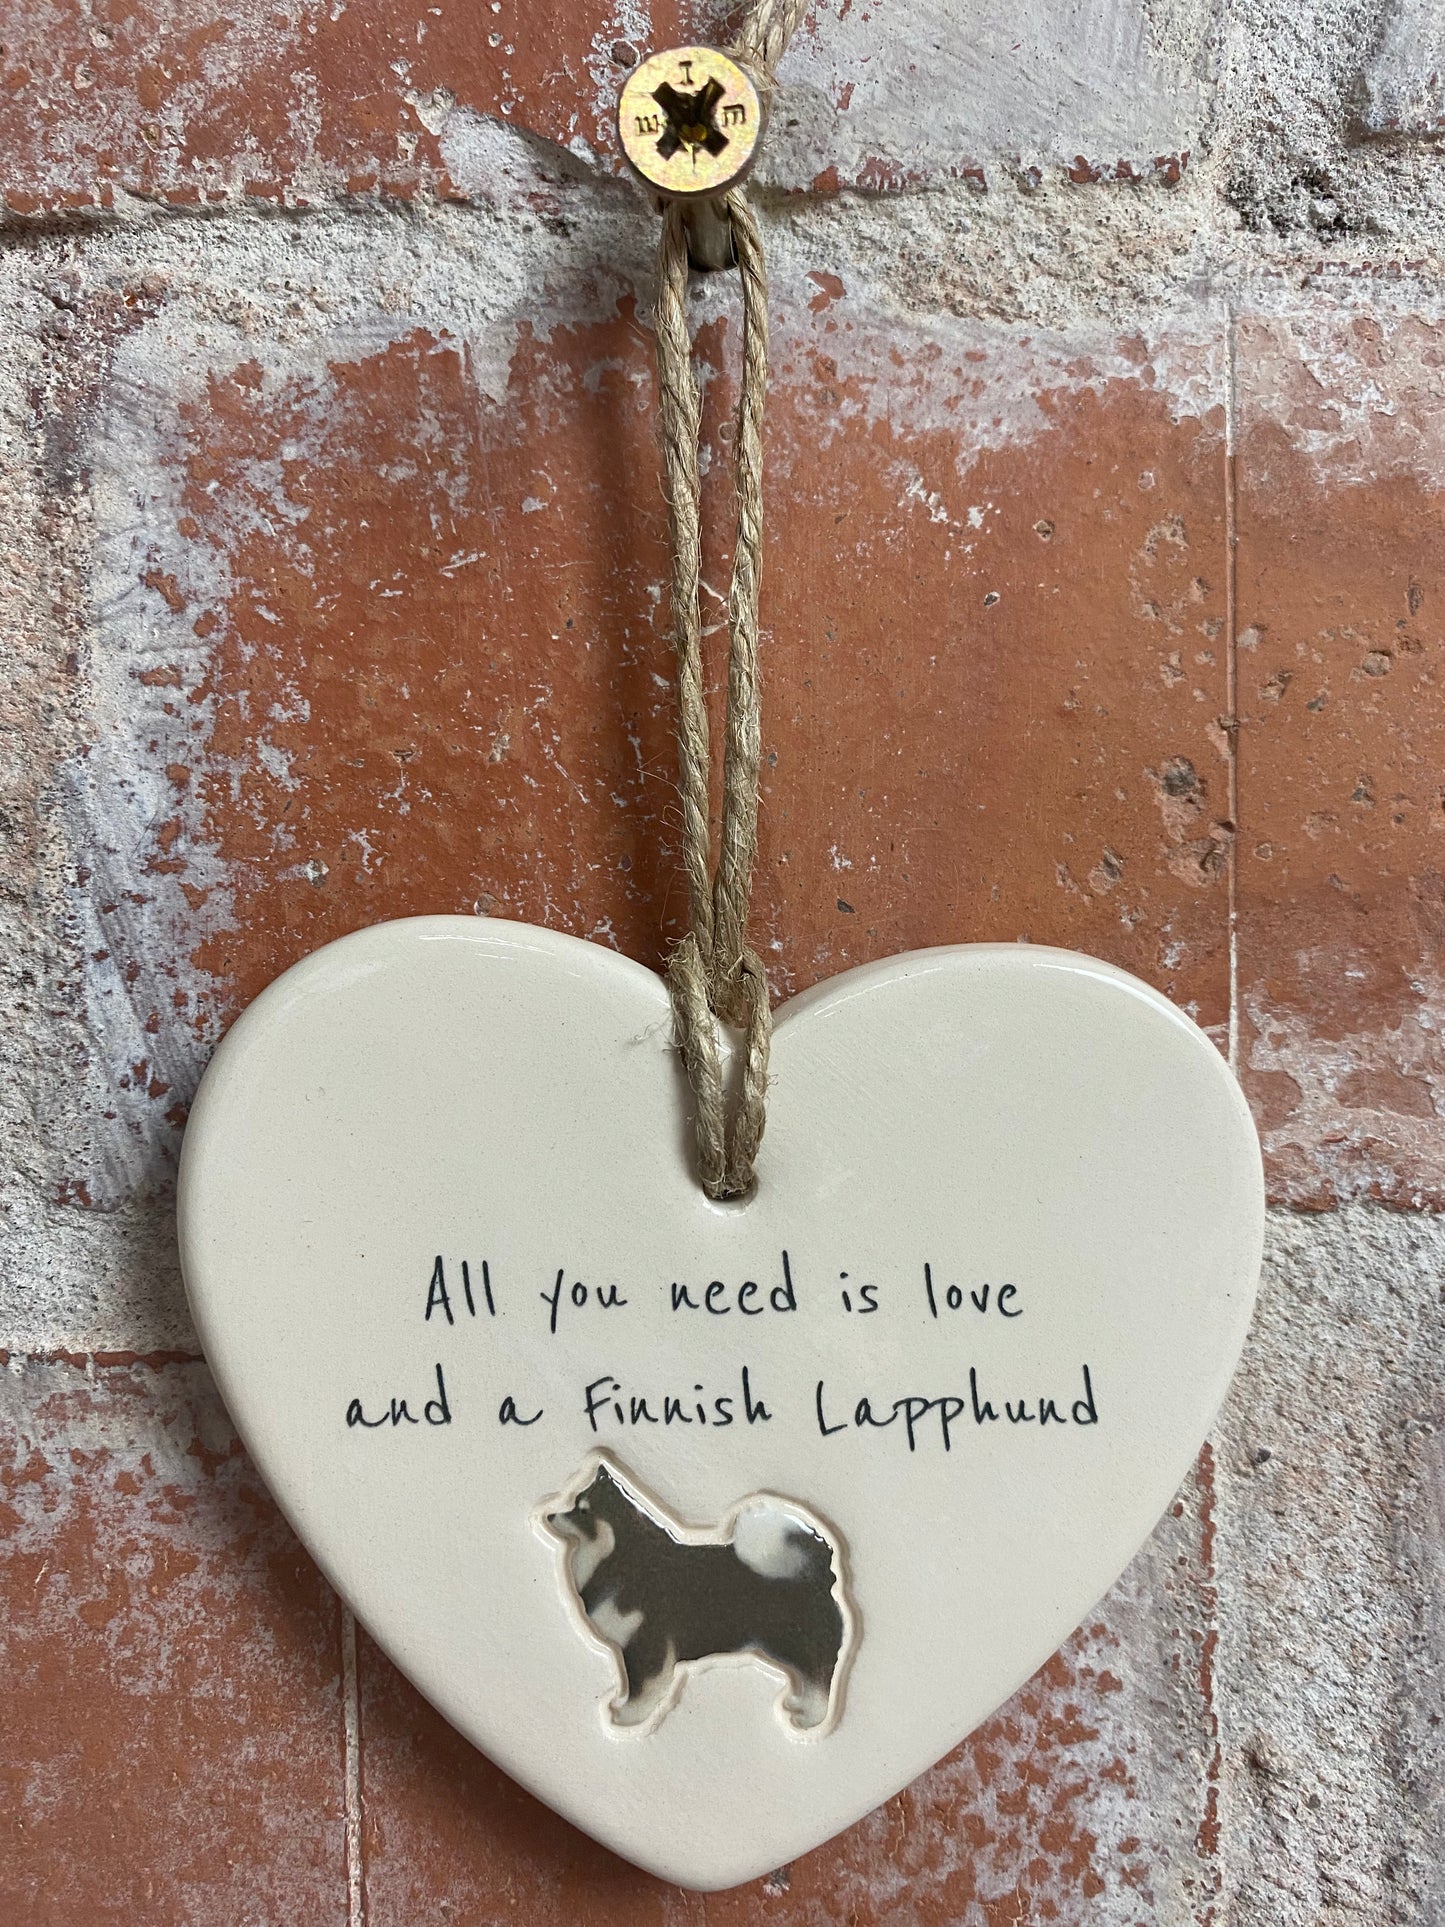 Finnish Lapphund ceramic heart